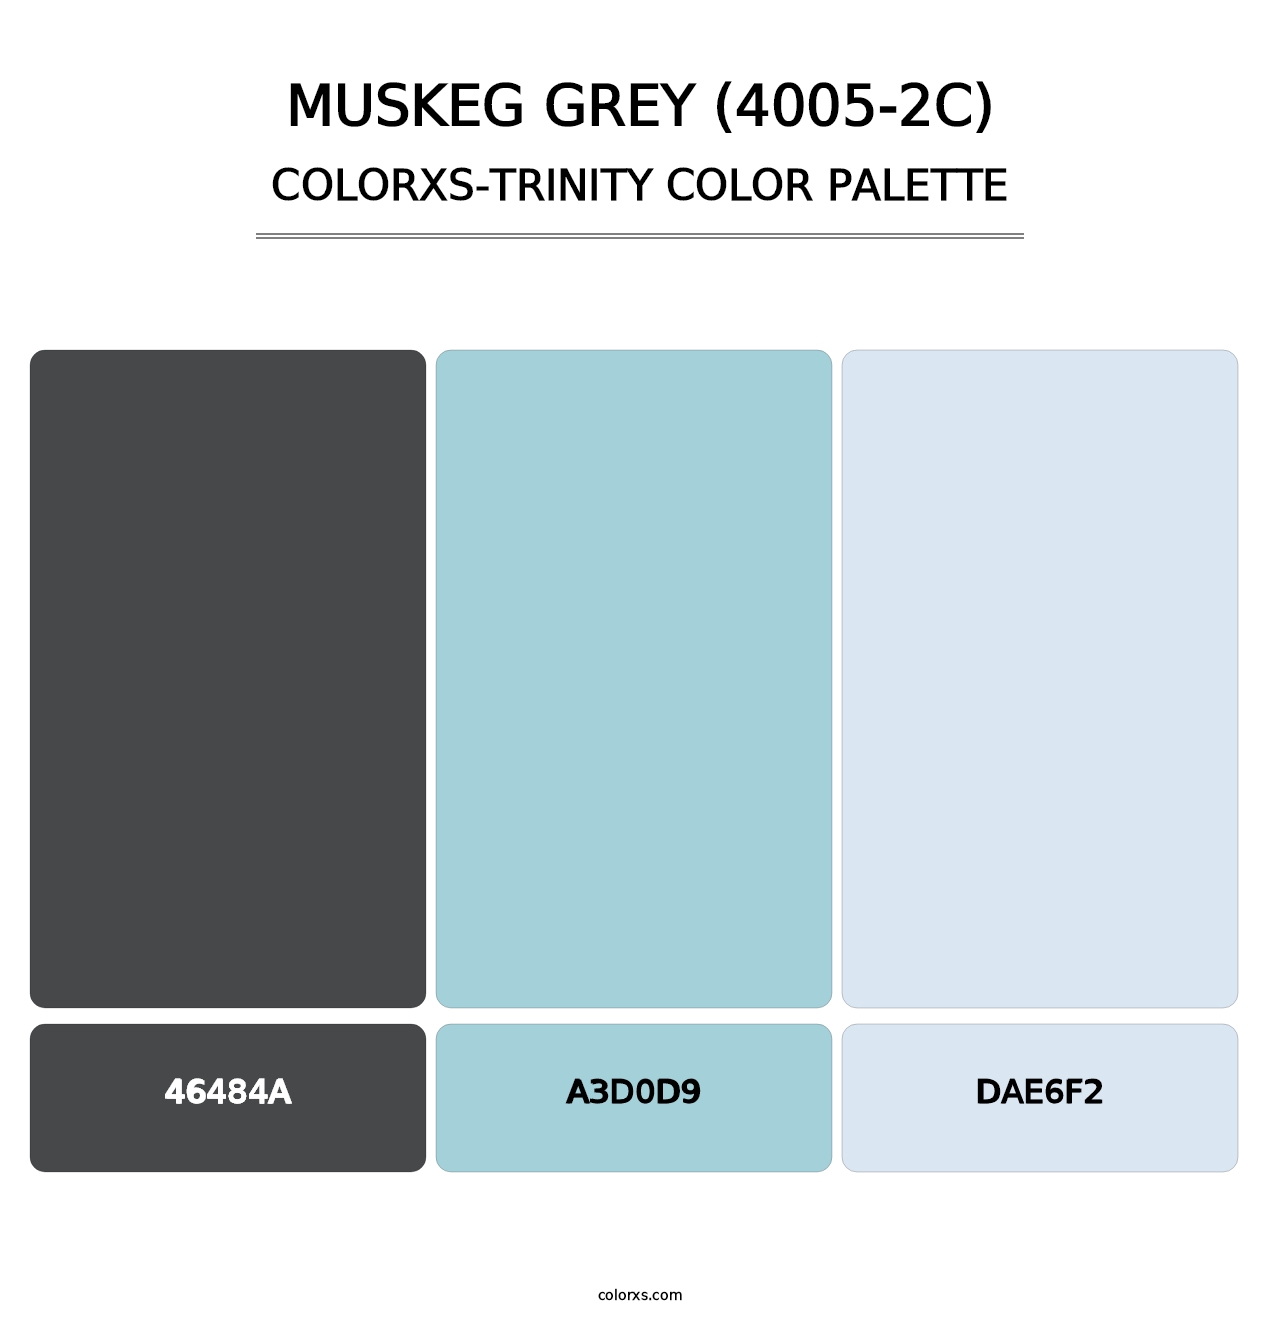 Muskeg Grey (4005-2C) - Colorxs Trinity Palette